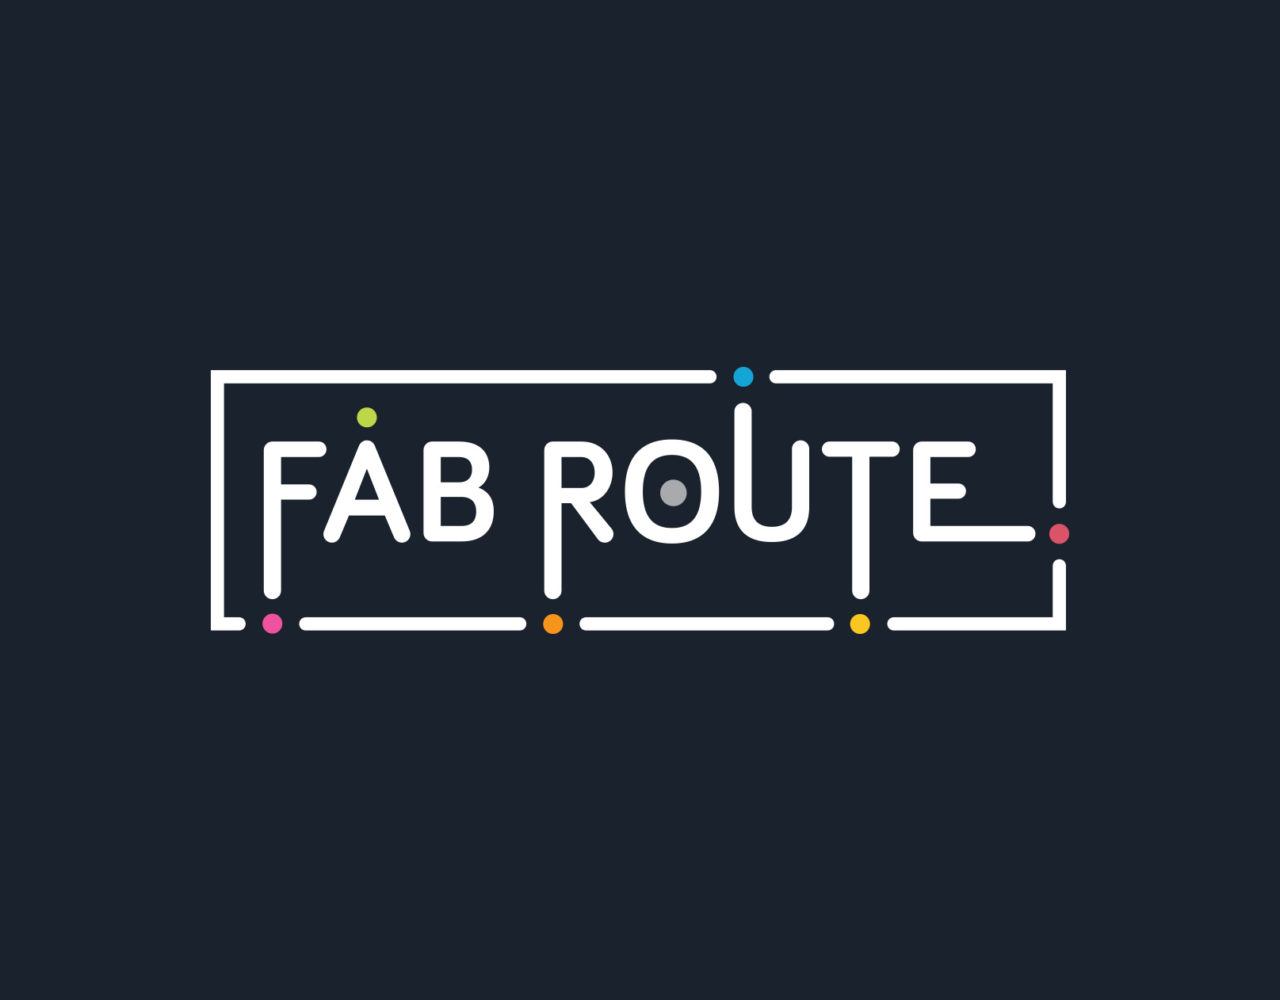 Fab route logo